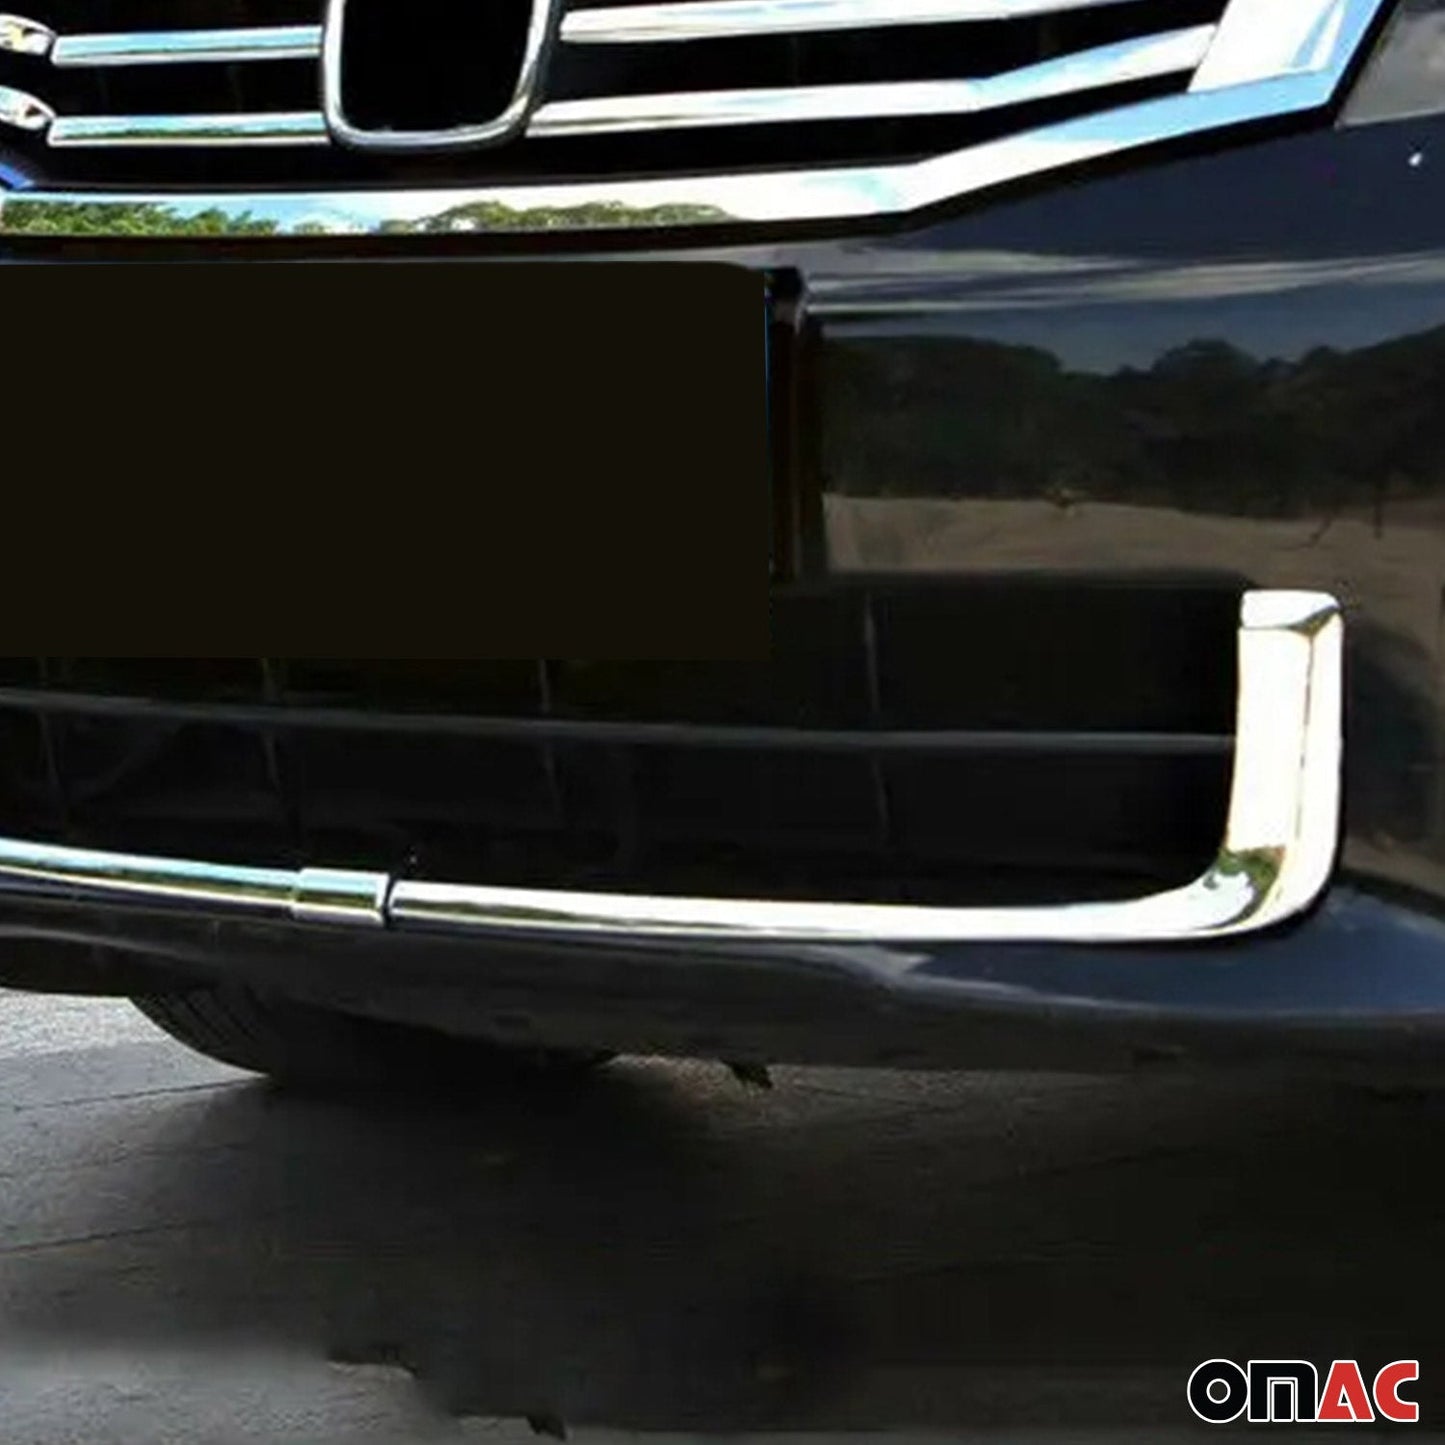 OMAC Front Bumper Grill Trim Molding for Acura TSX 2009-2014 Silver 2 Pcs U003653